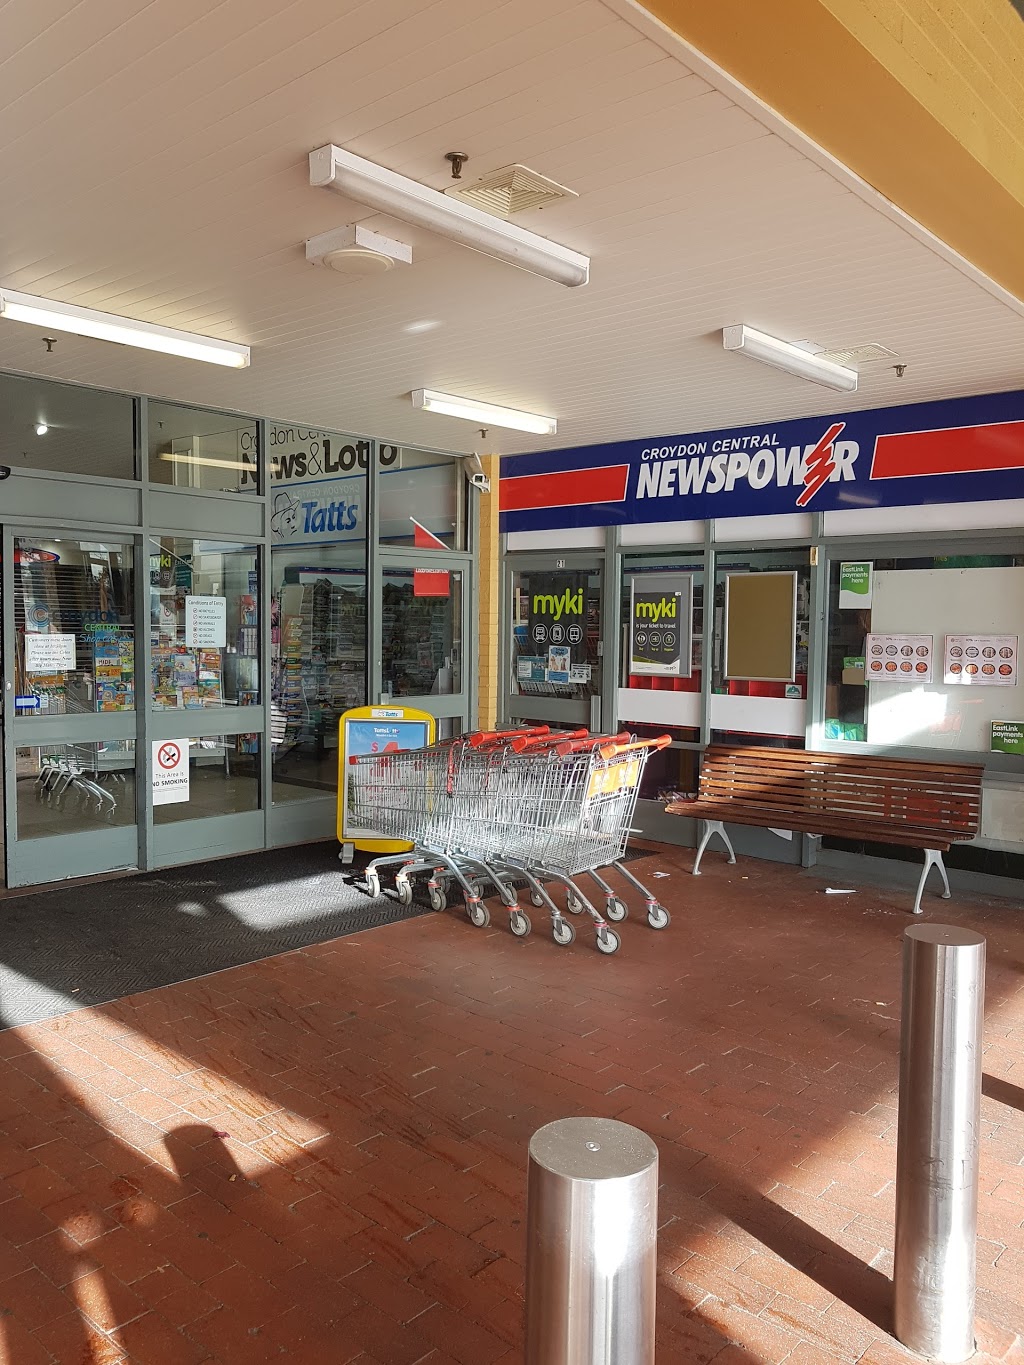 Croydon Central News and Lotto | store | 5-15 Kent Ave, Croydon VIC 3136, Australia